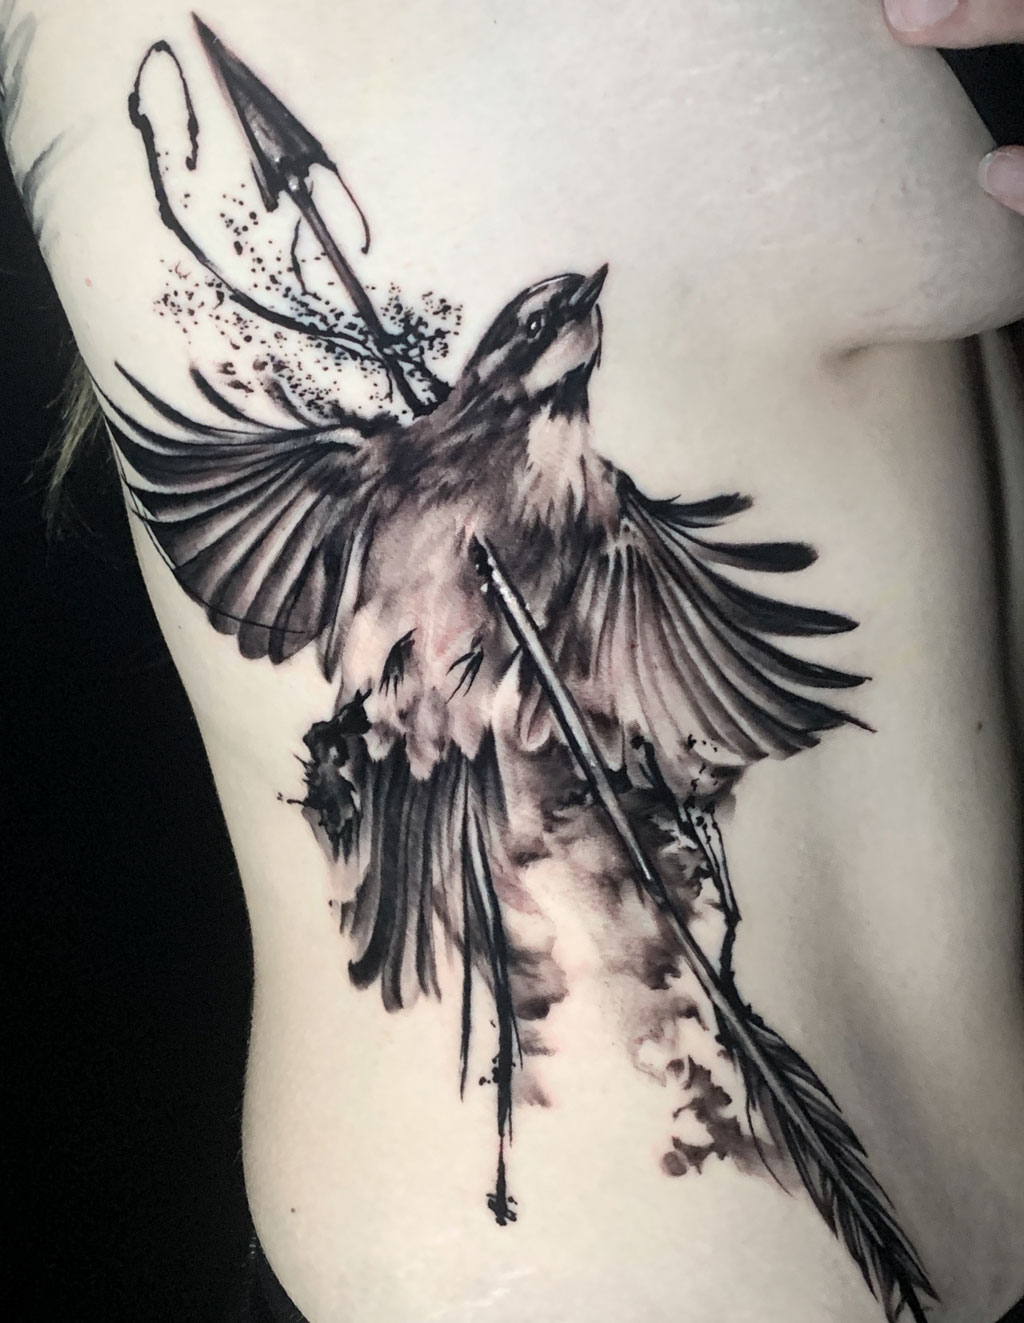 Tattoo Anansi Studio München Munich Haidhausen Tim side ribs bird arrow best black and grey realistic animal sketchy abstract